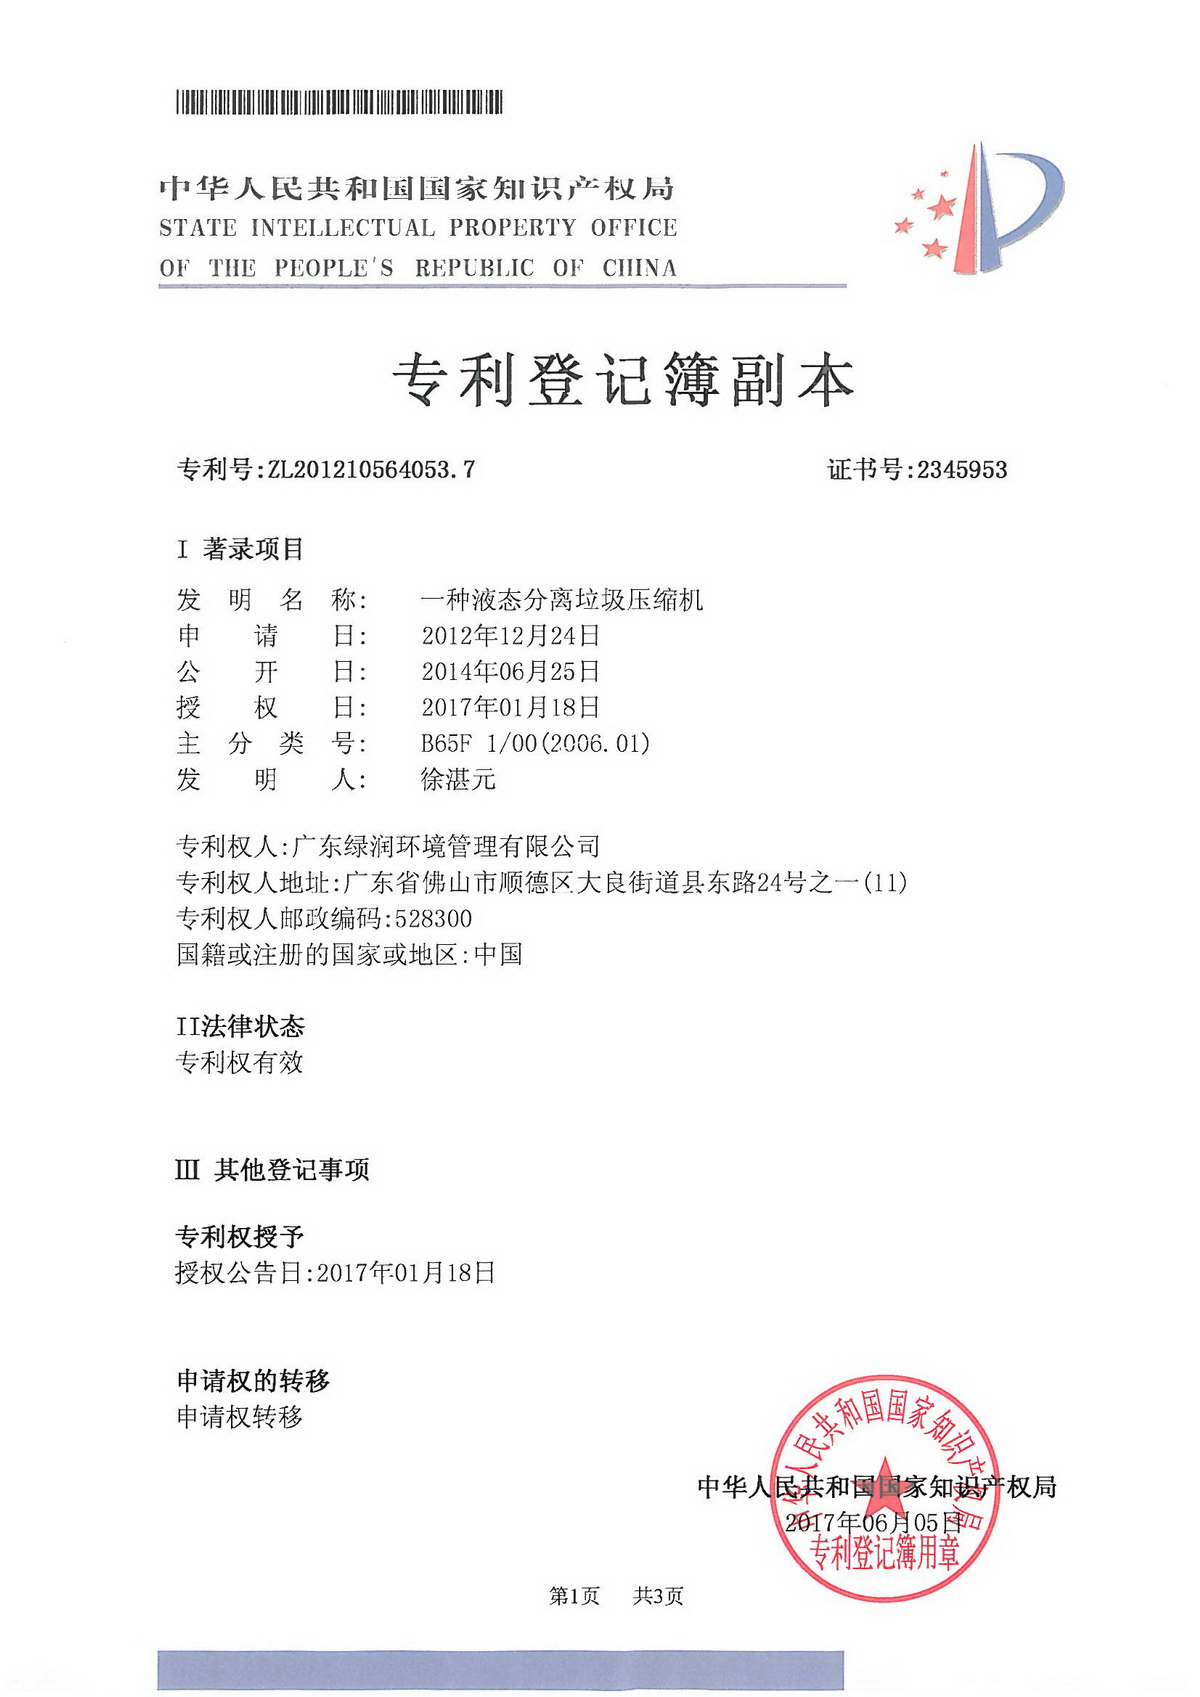 Invention patent certificate (a liquid separation garbage compressor)